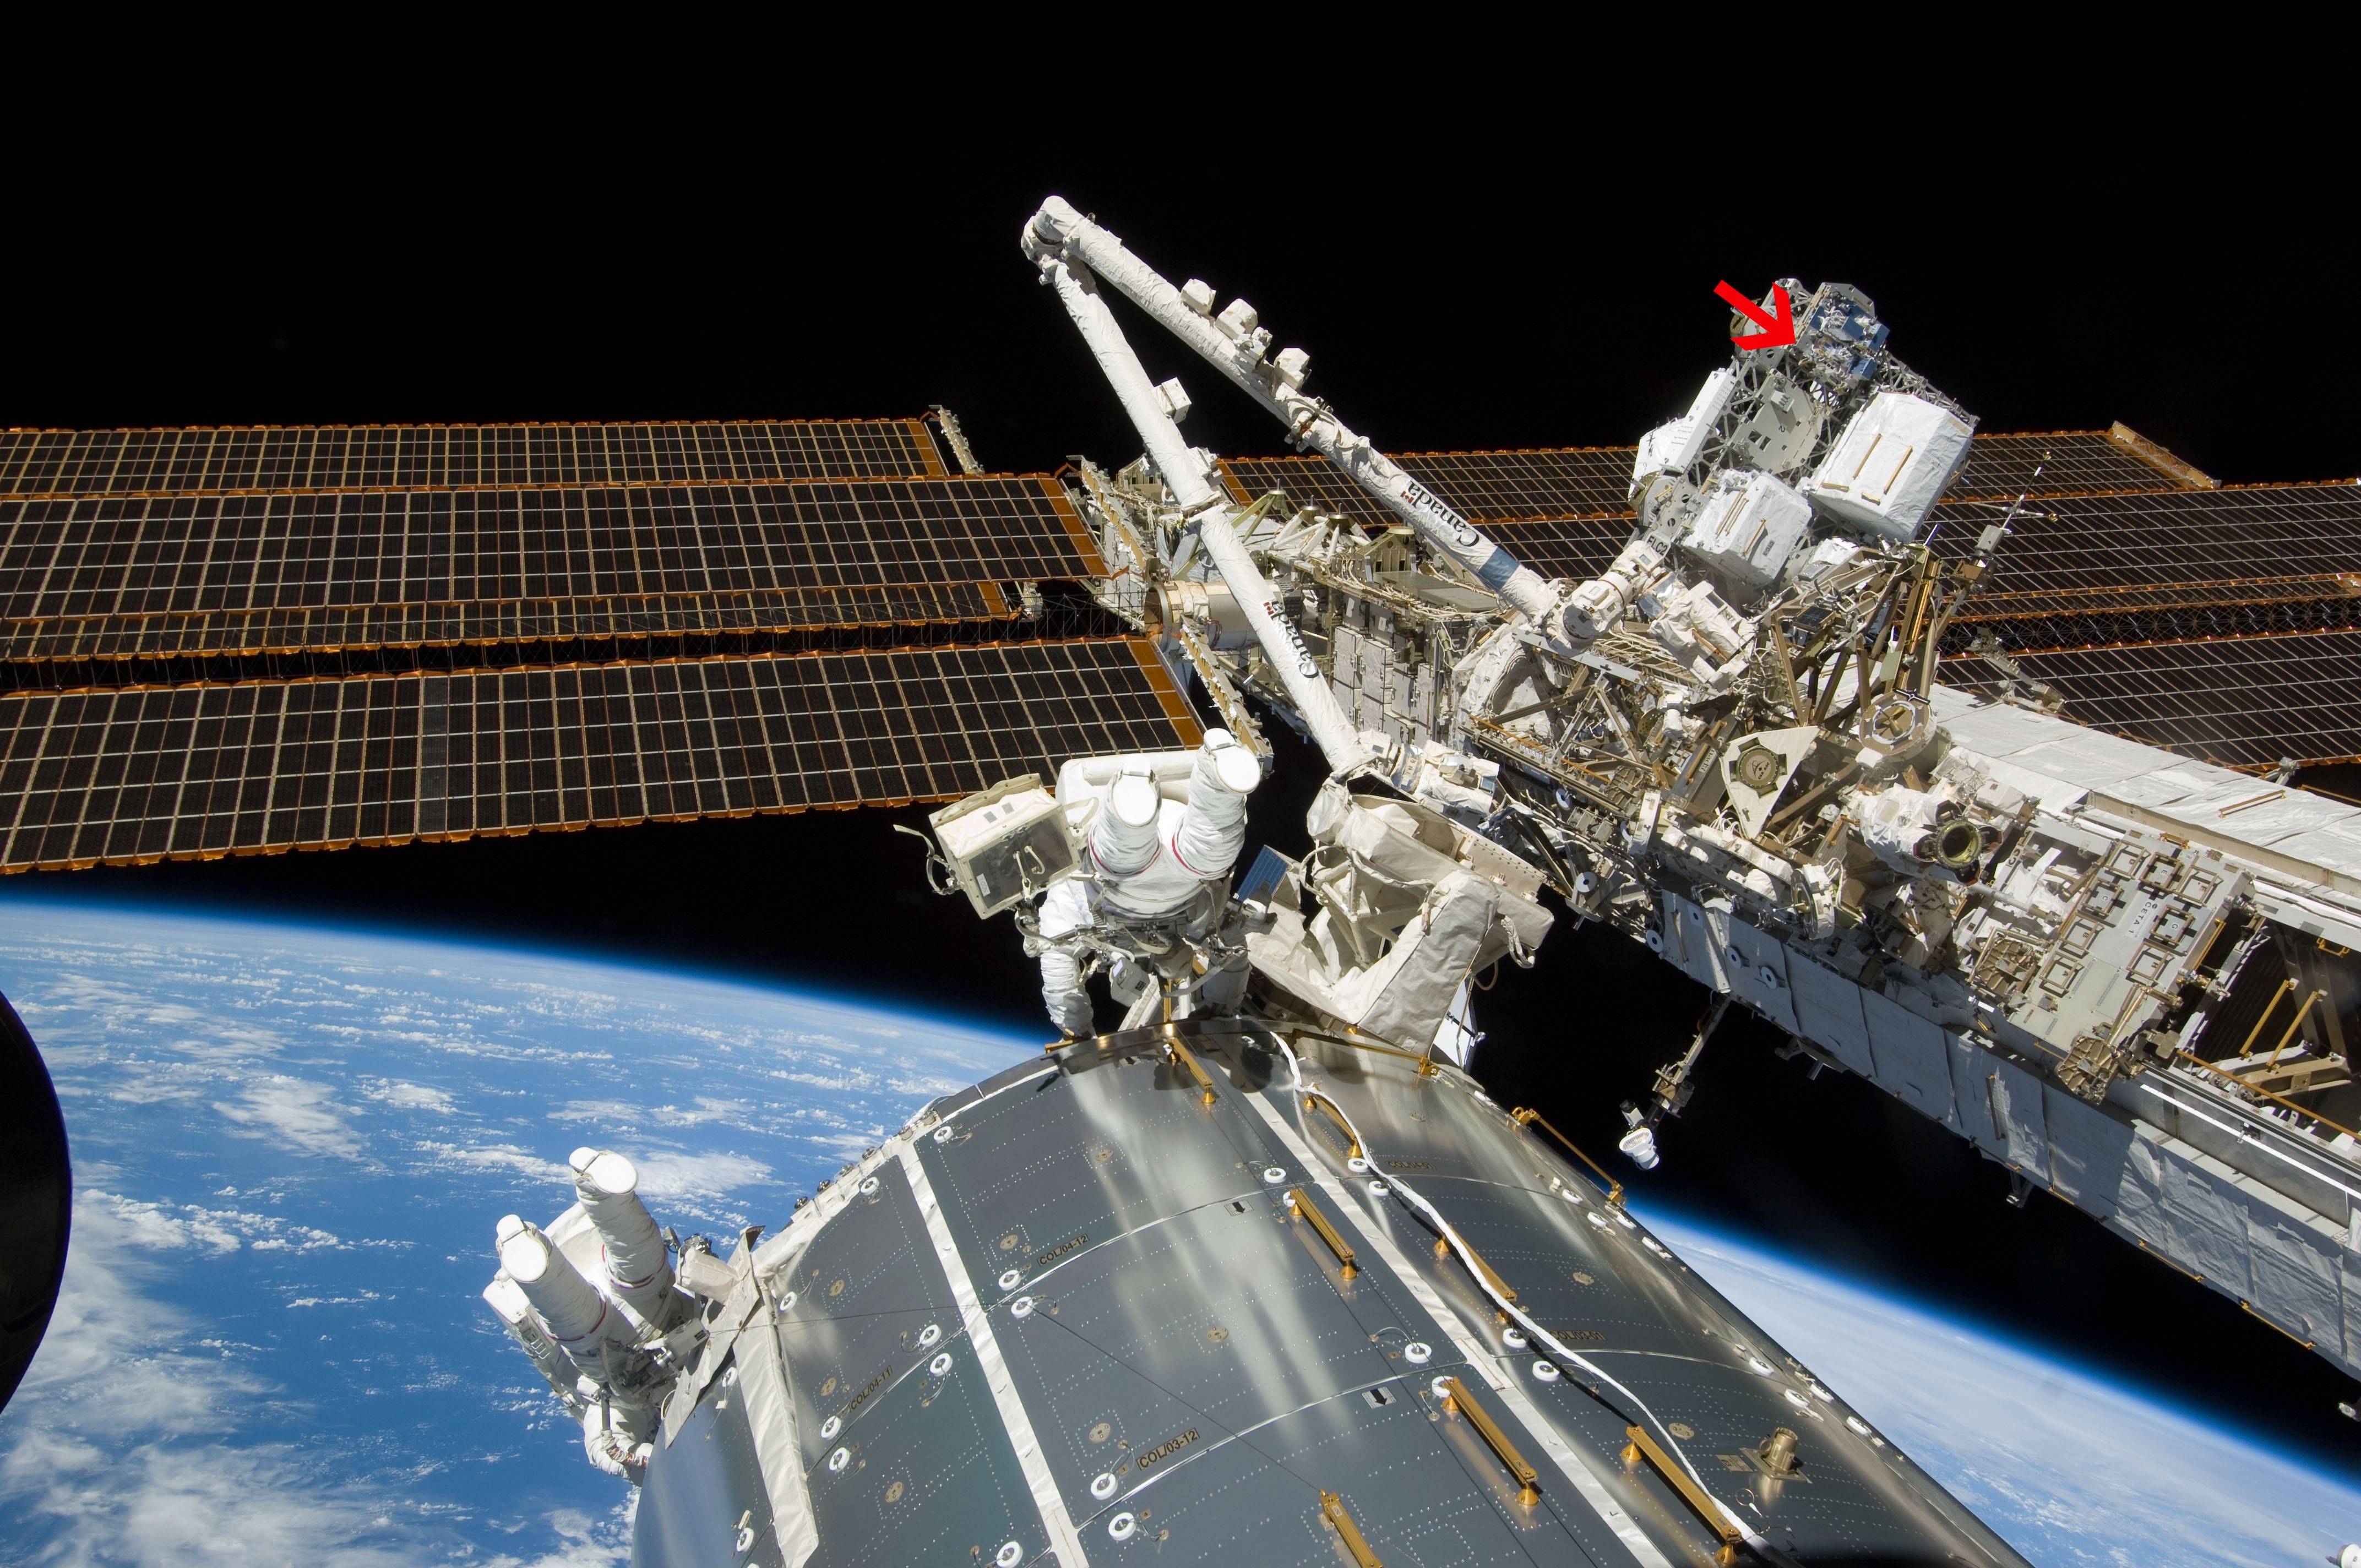 SpaceCube onboard the International Space Station. Credit: NASA Goddard Flickr